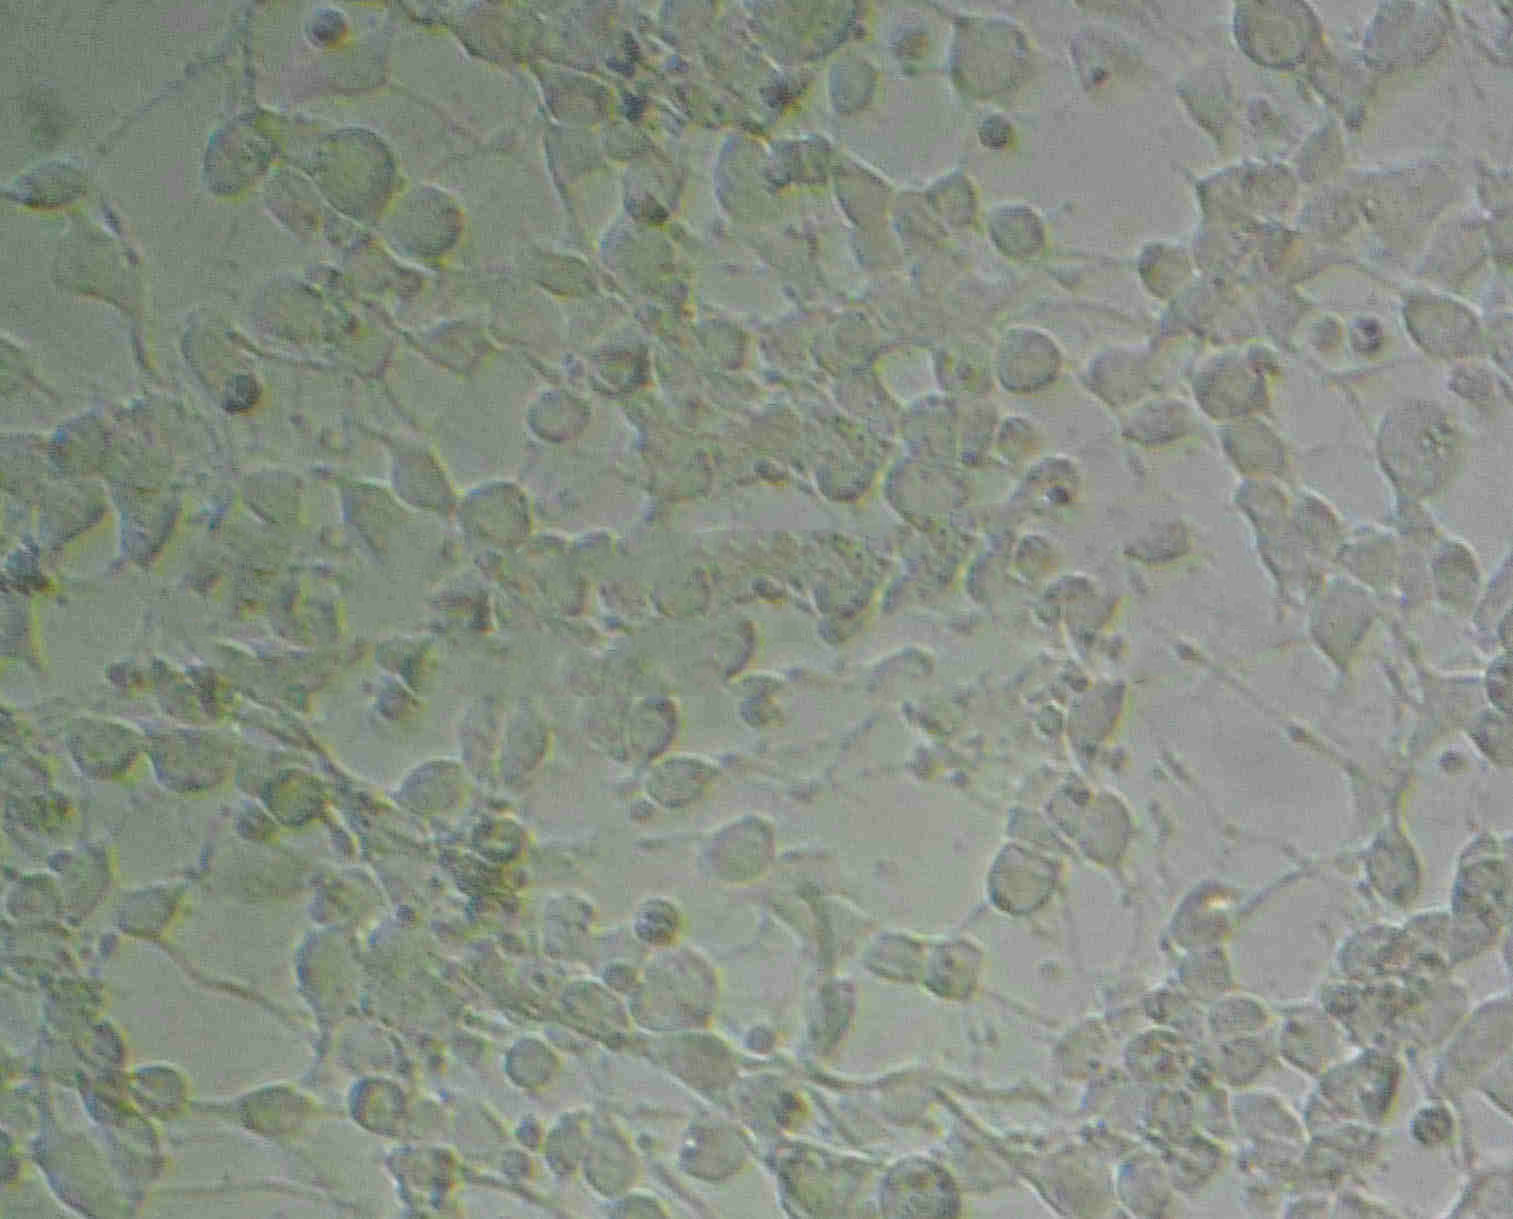 F98 Cell|大鼠胶质瘤细胞,F98 Cell